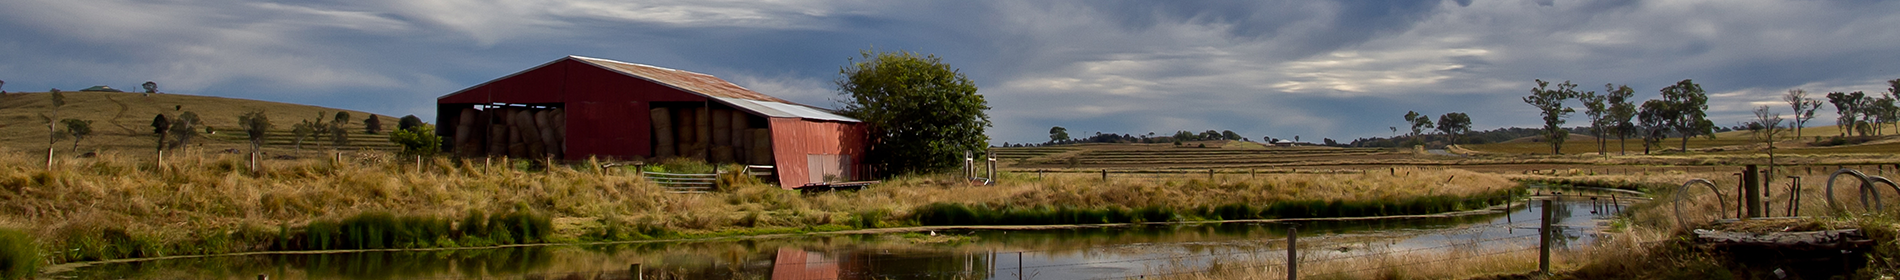 Panarama image of a farm shed and dam